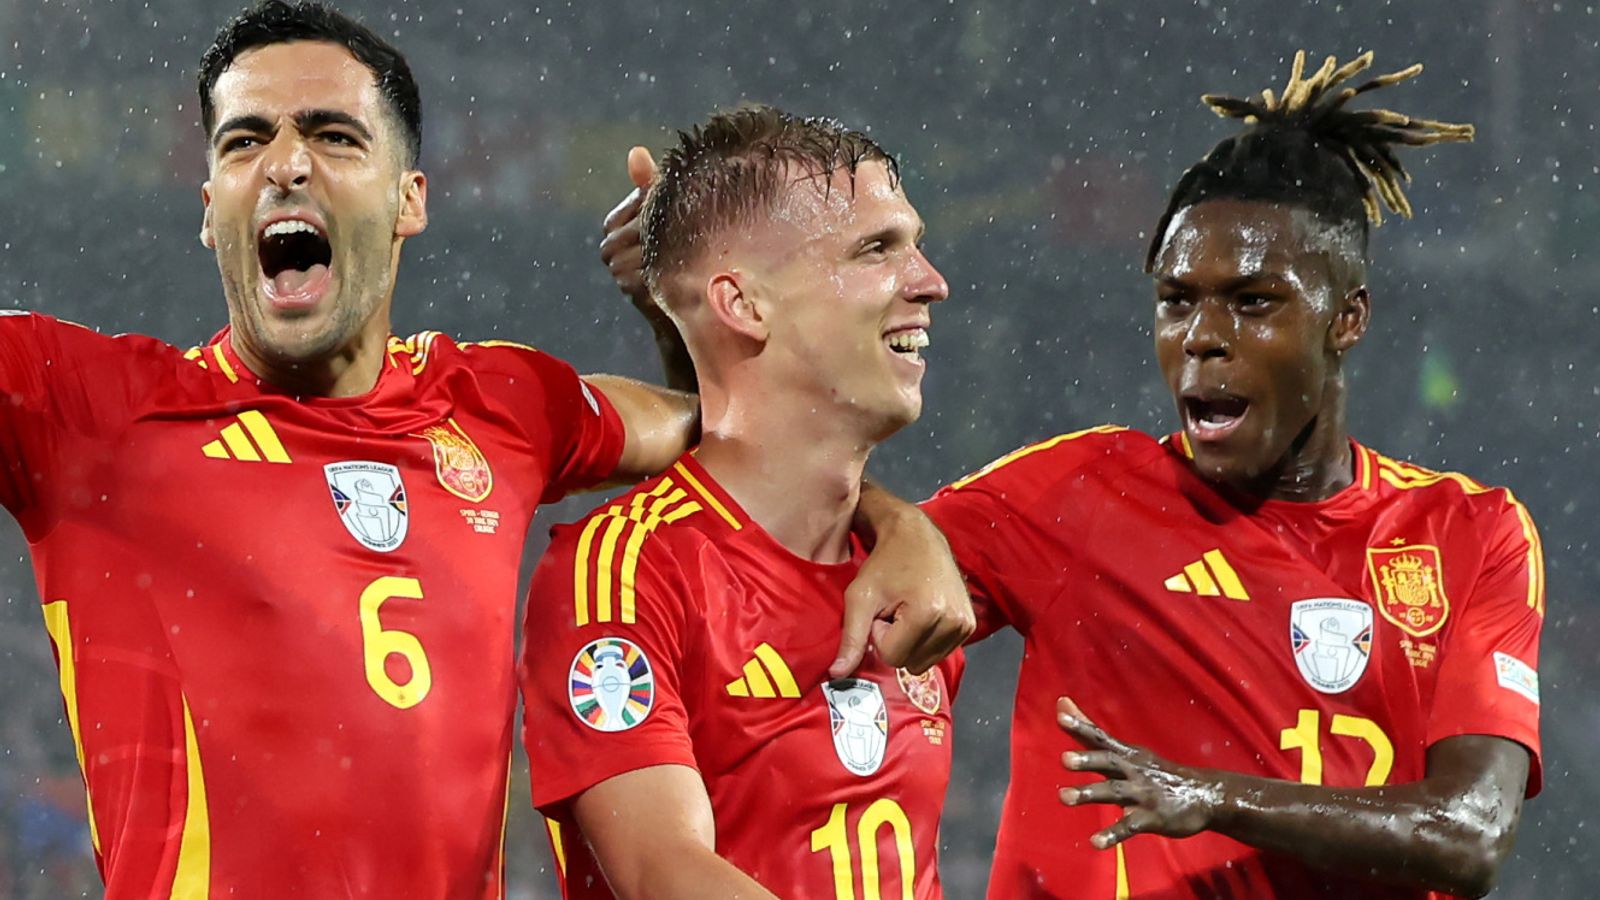 Spain celebrate their fourth goal scored by Dani Olmo